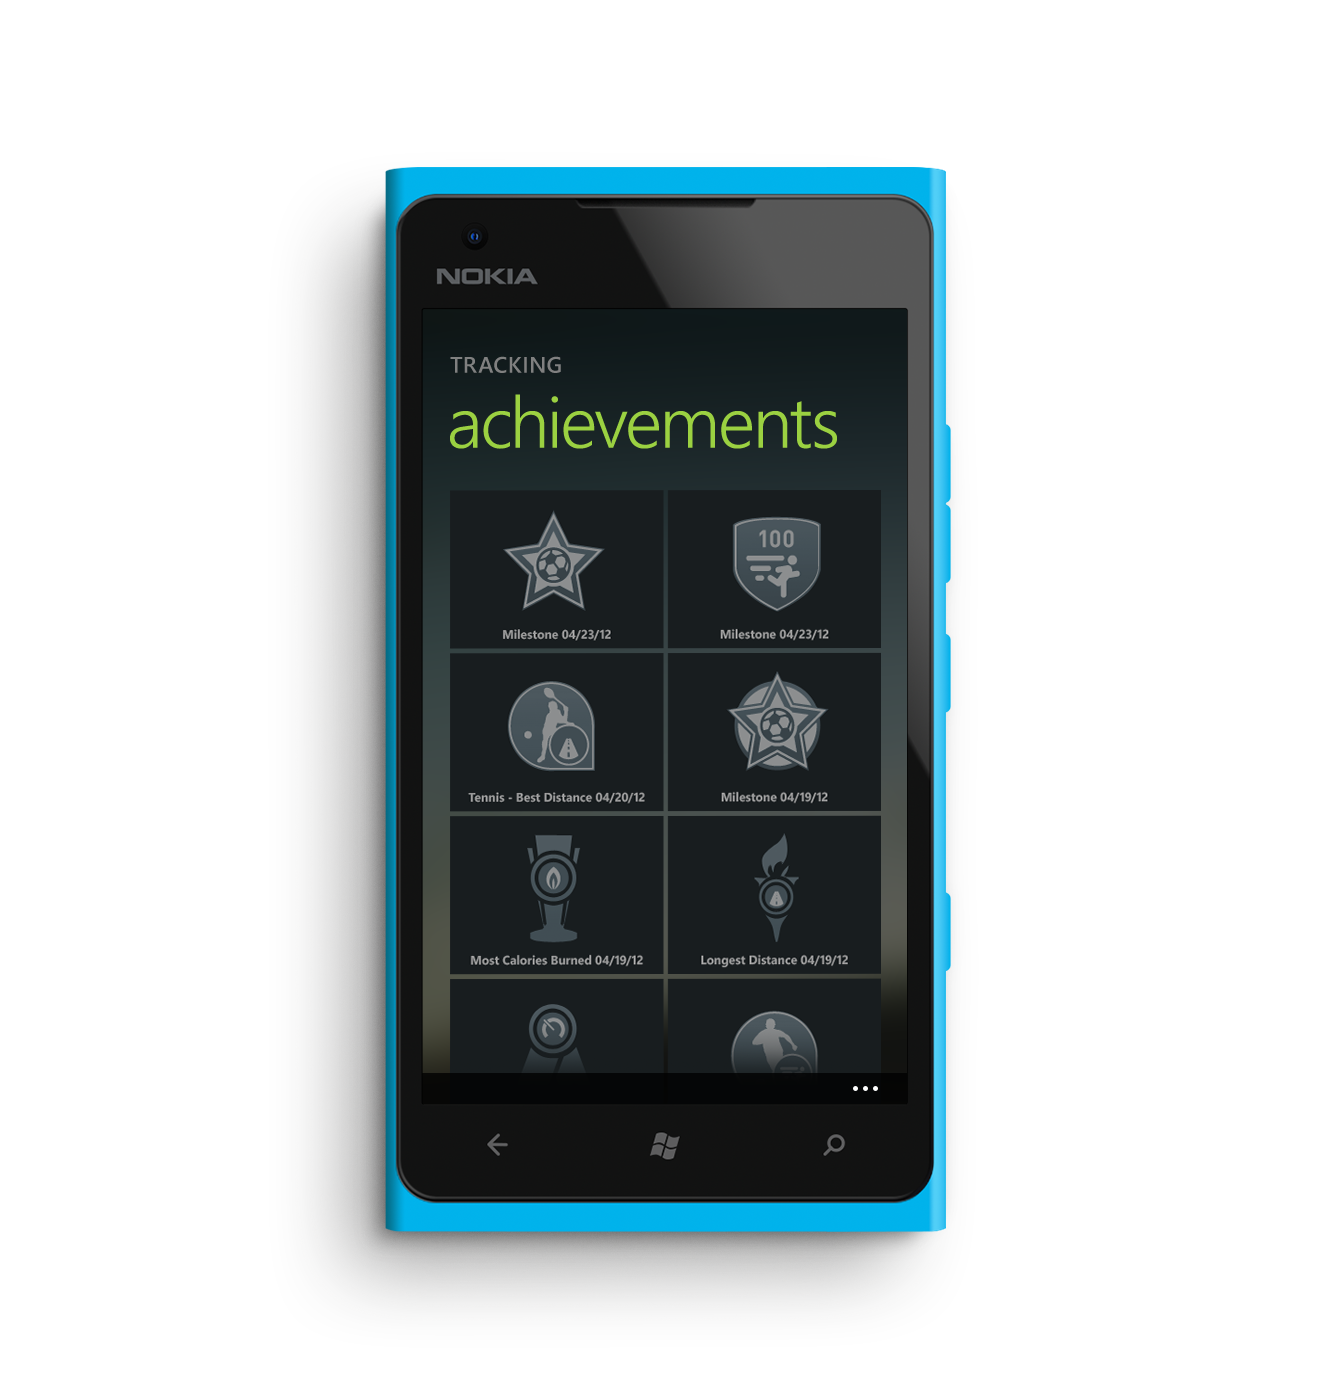 Nokia Adidas miCoach interface design Achievements